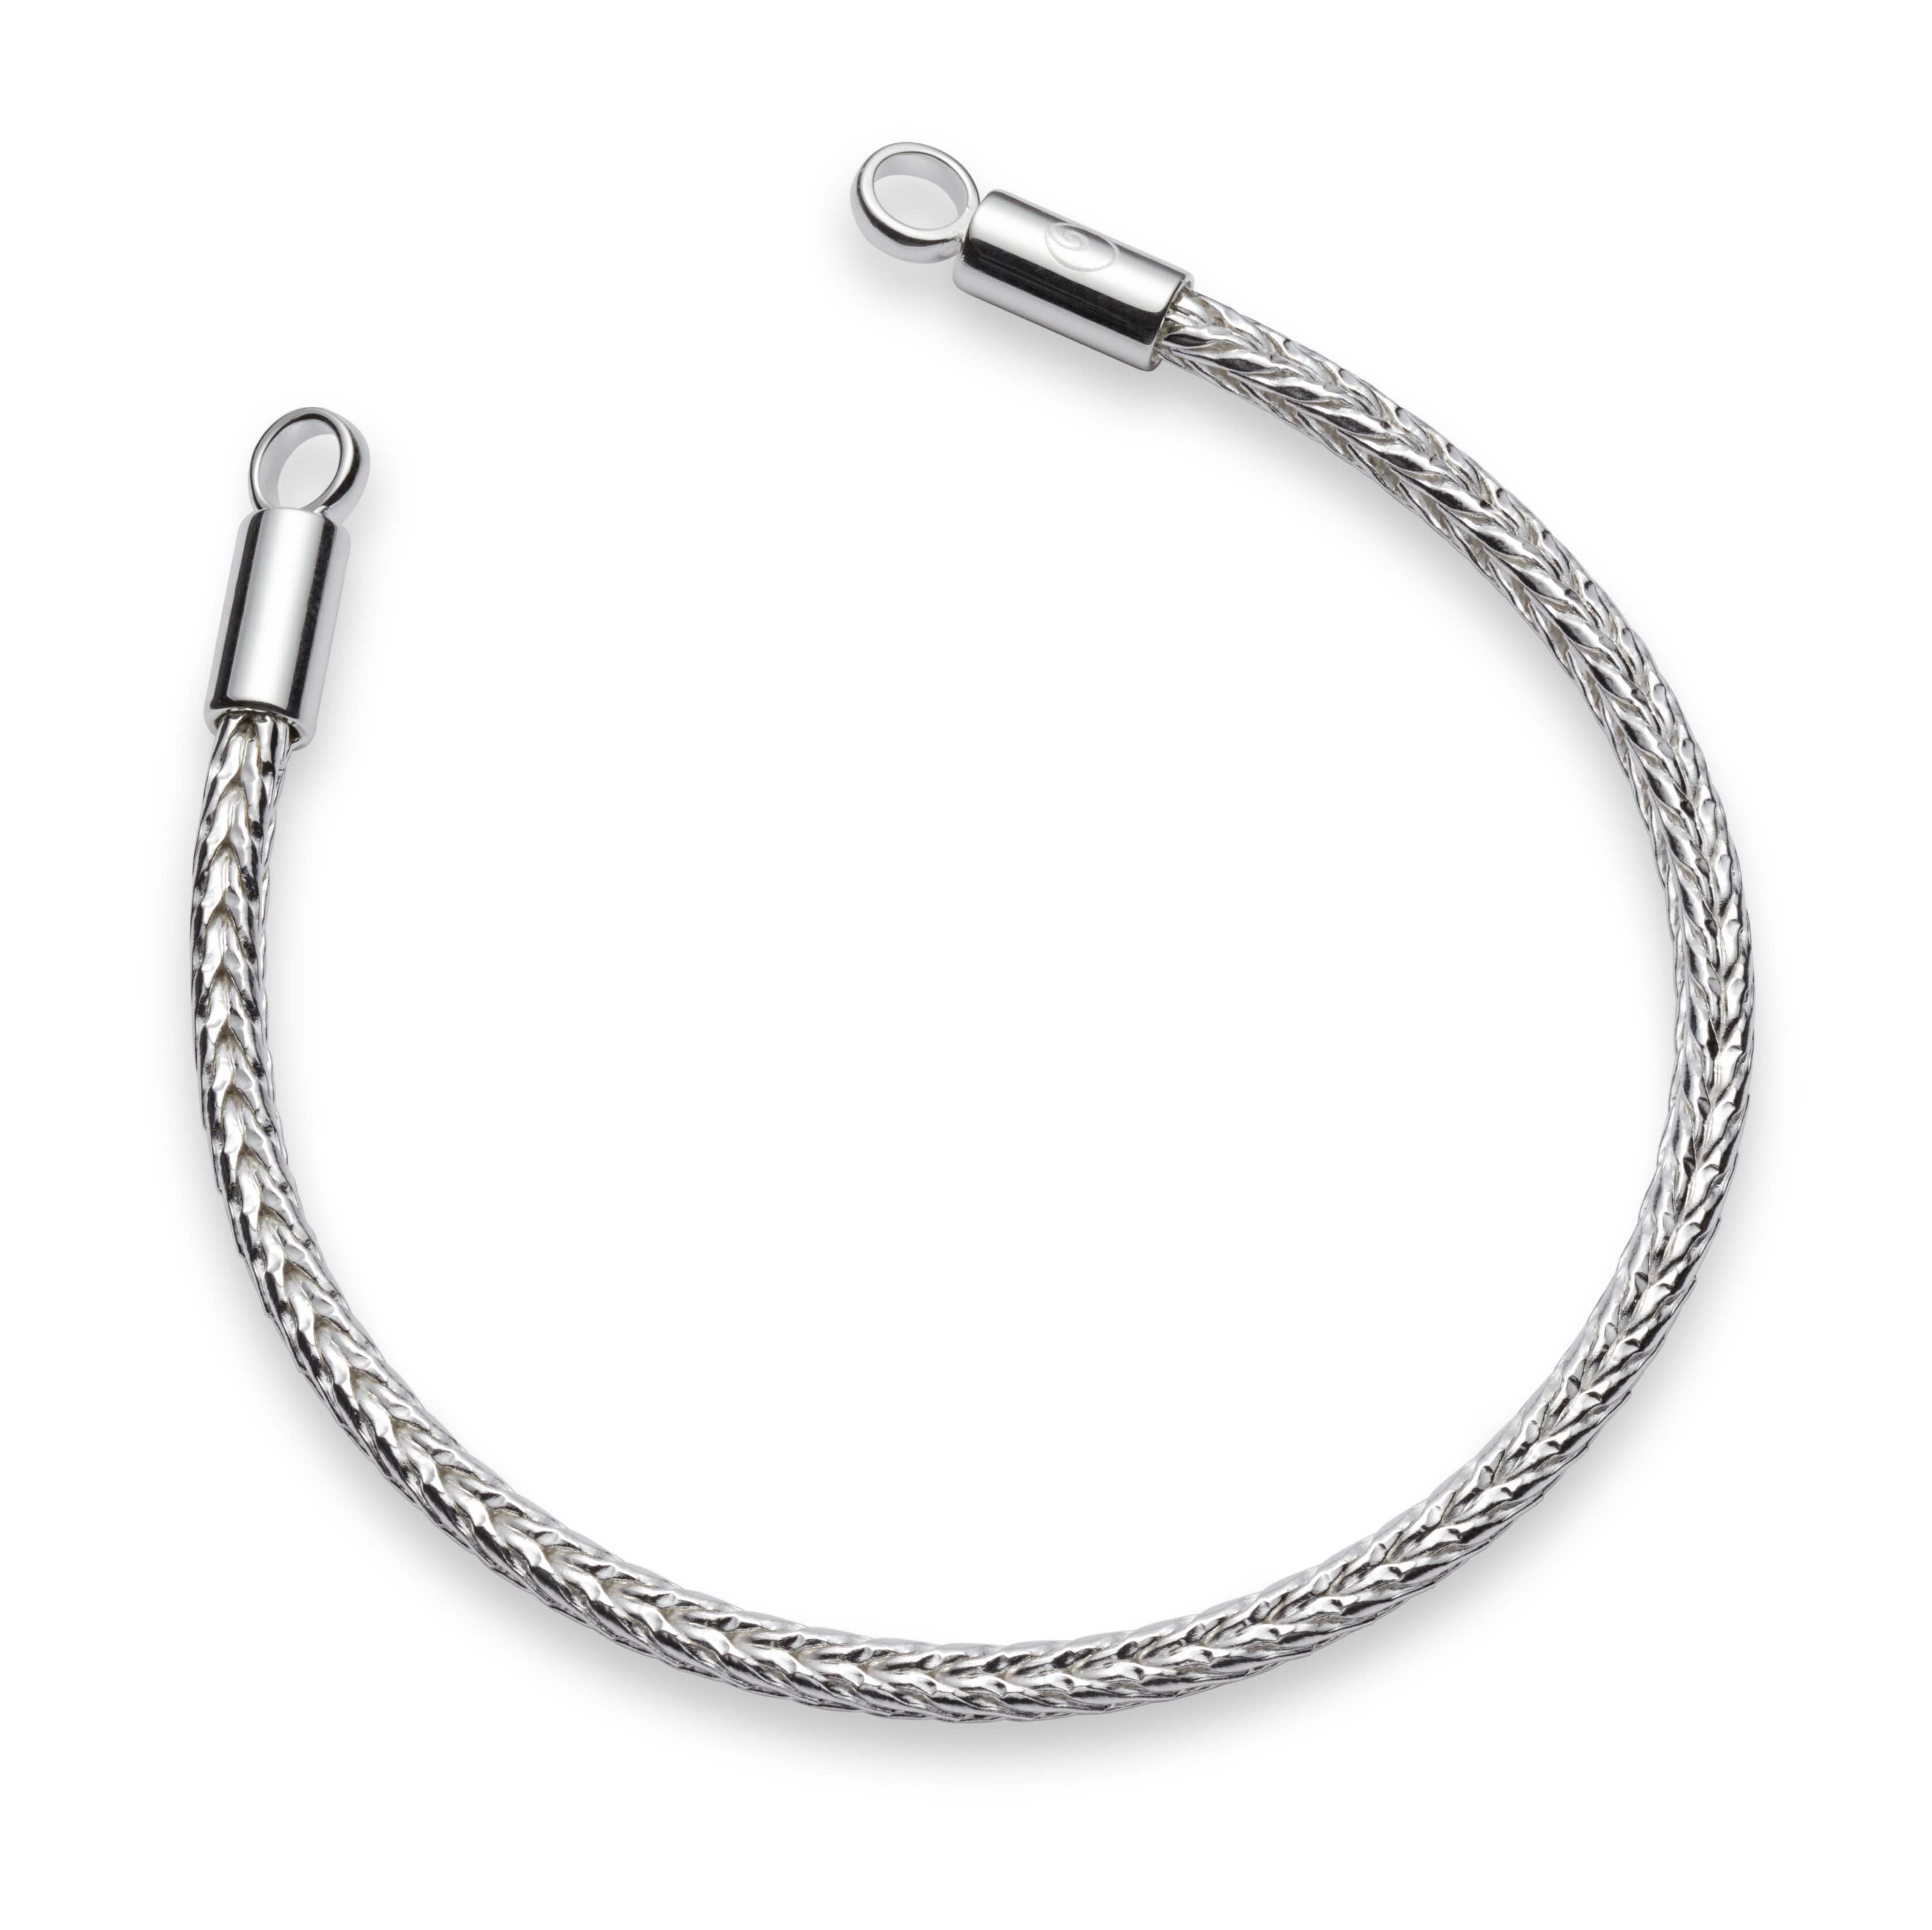 Silver Tulang Naga Bracelet